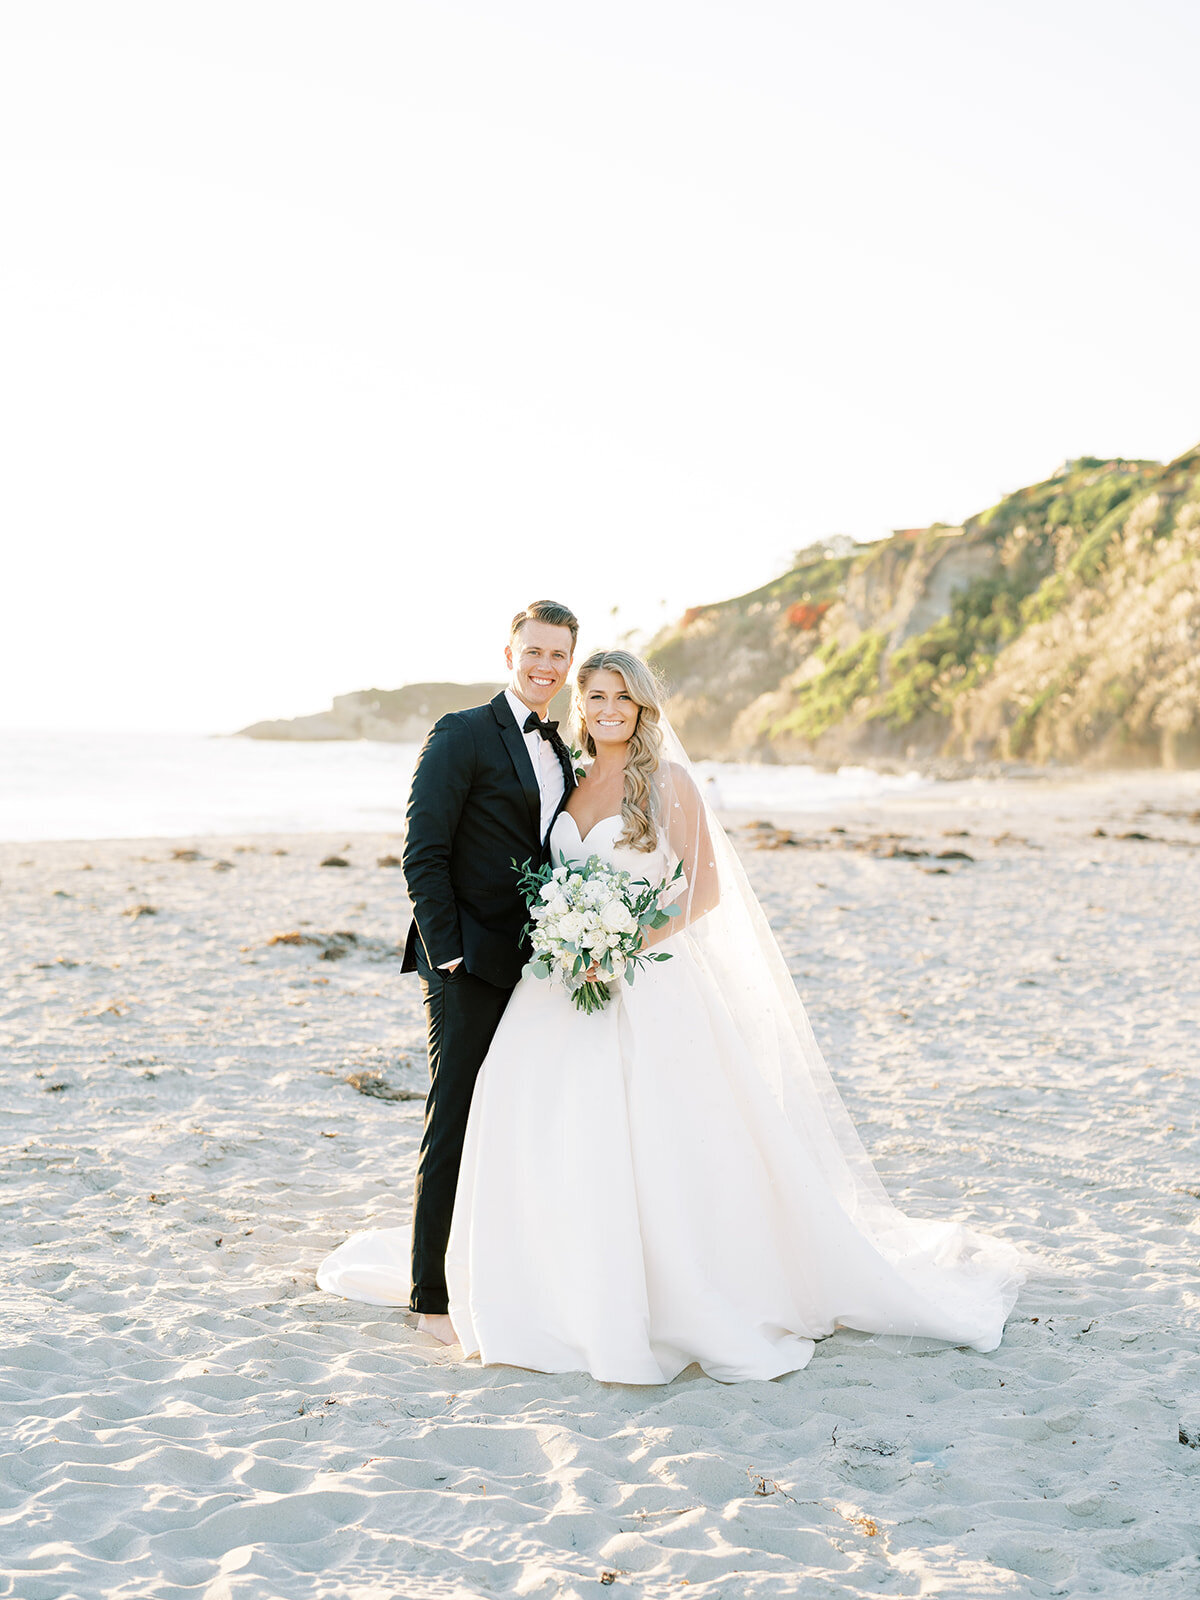 Kaitlyn & Tyler - Monarch Beach Resort Wedding - Danielle Bacon Photography -555_websize